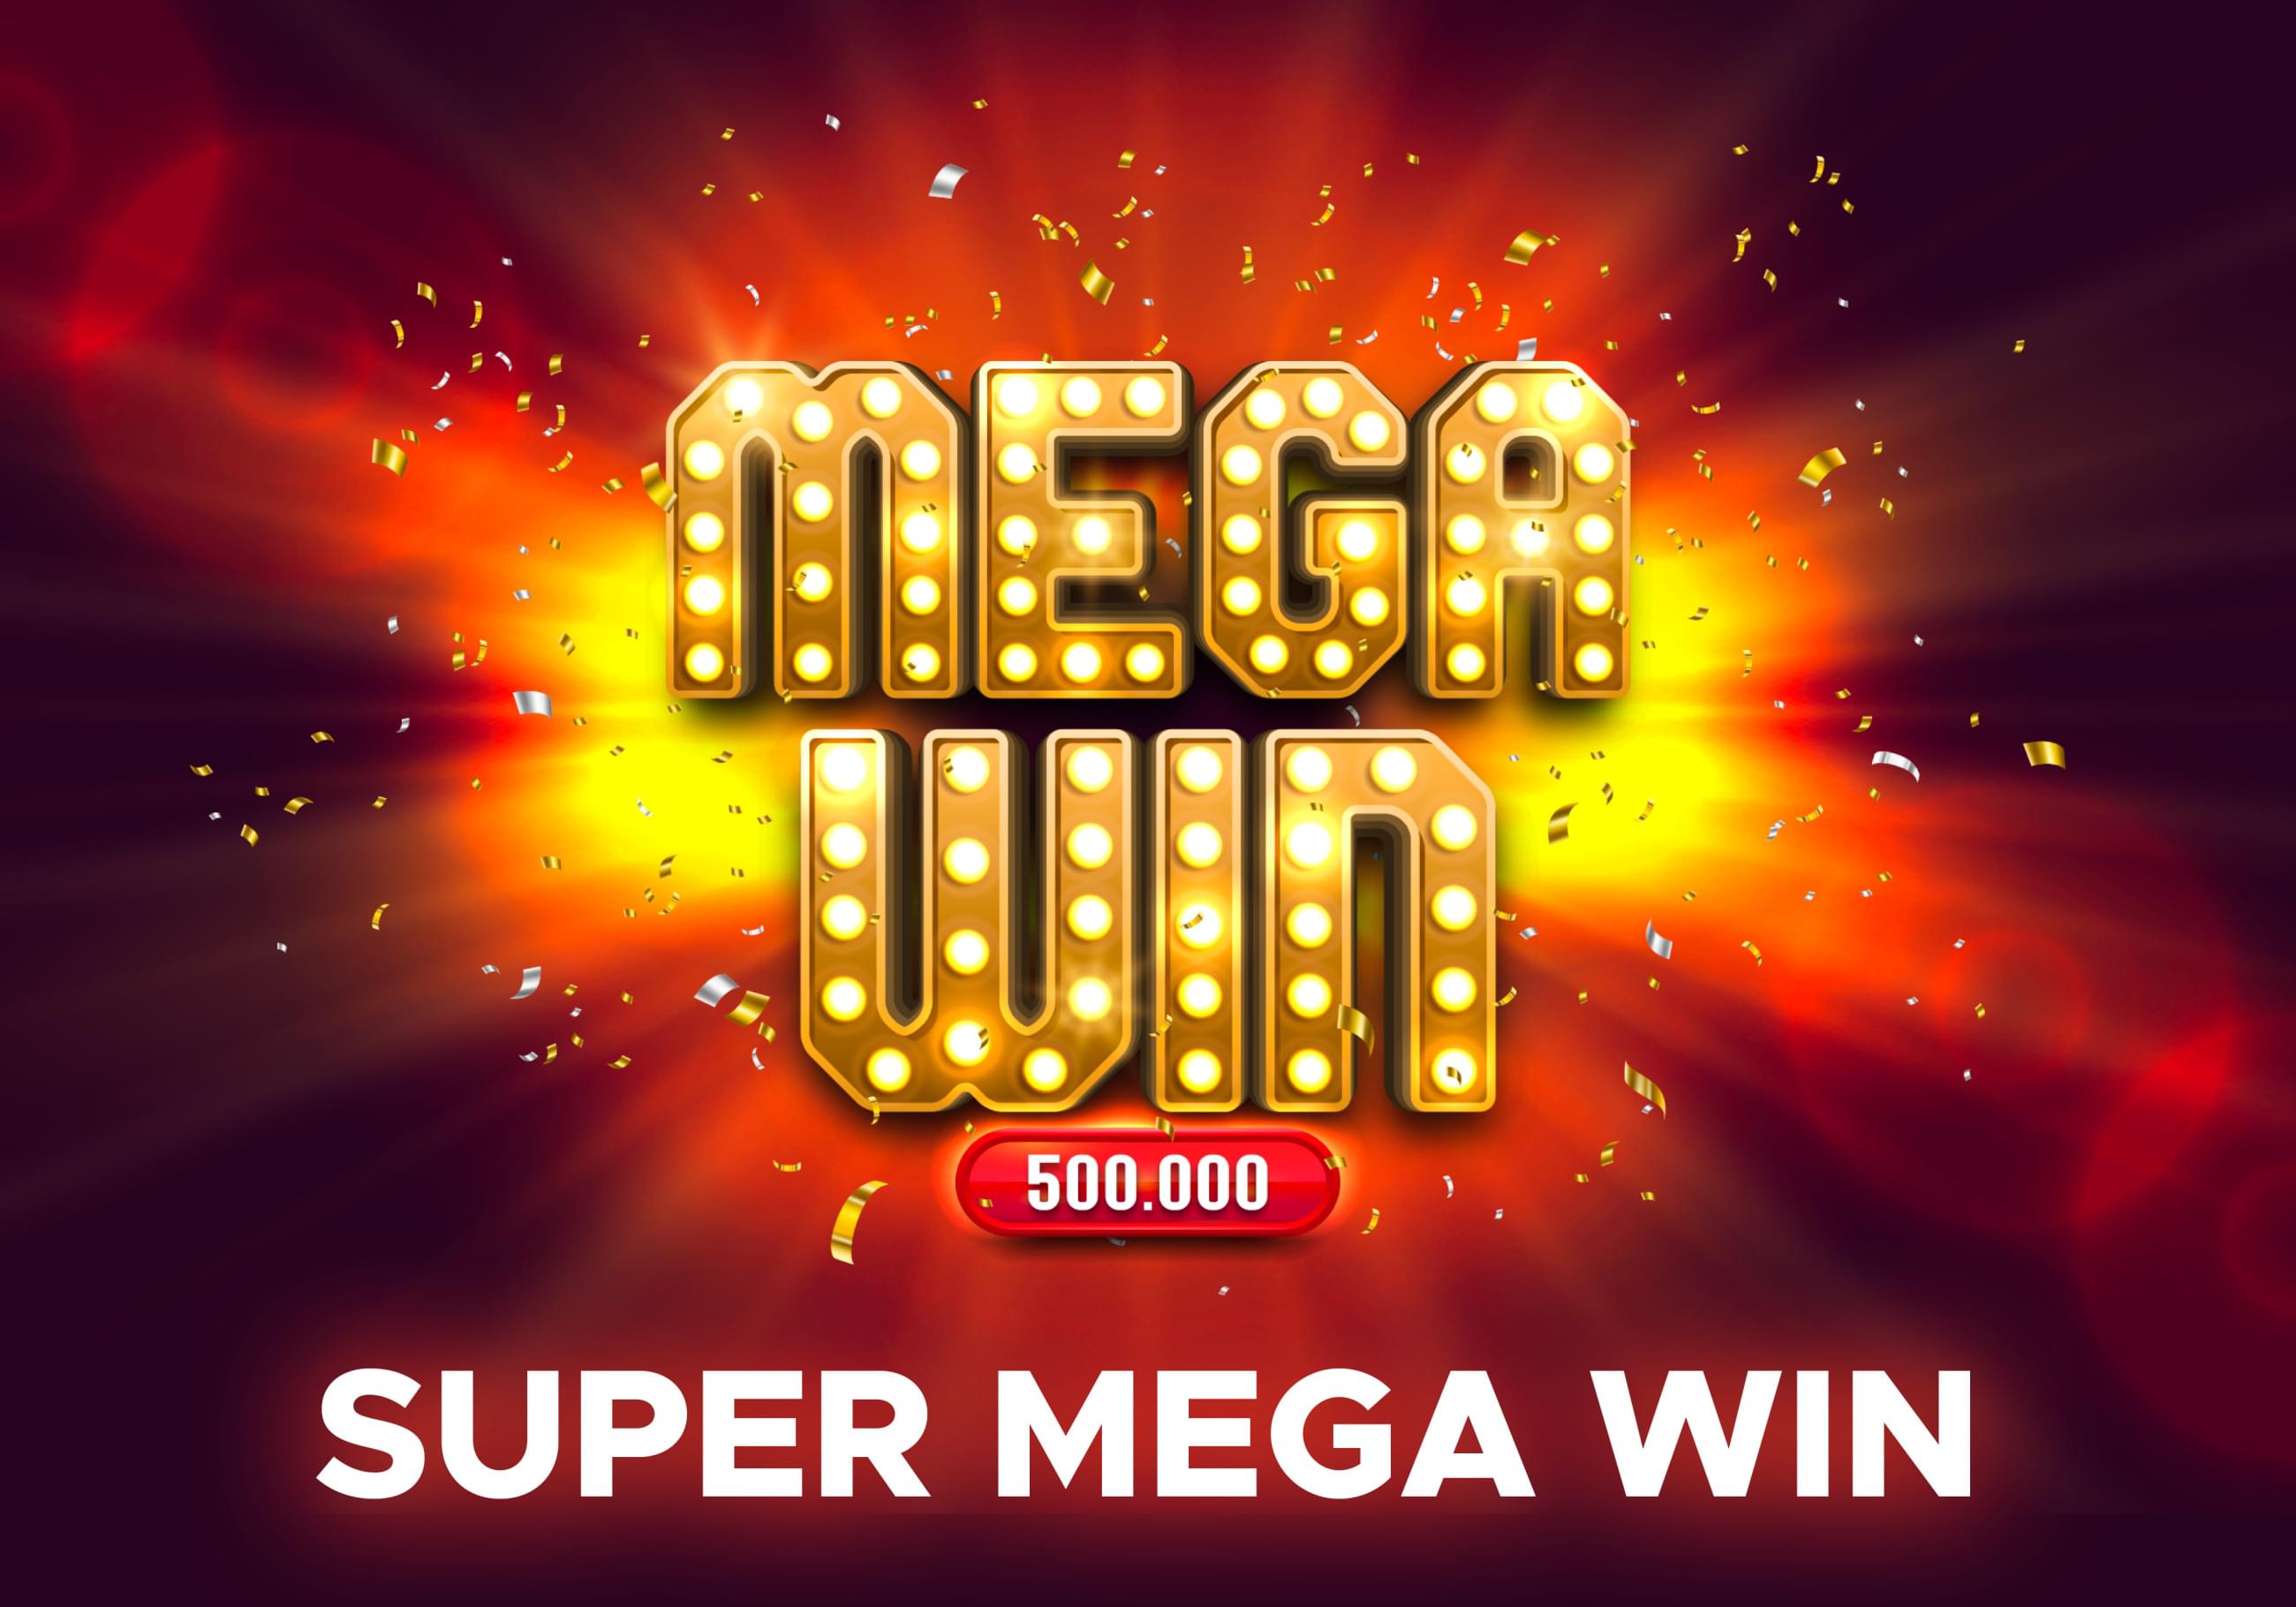 Nápis Mega Win, výbuchy, 500.000